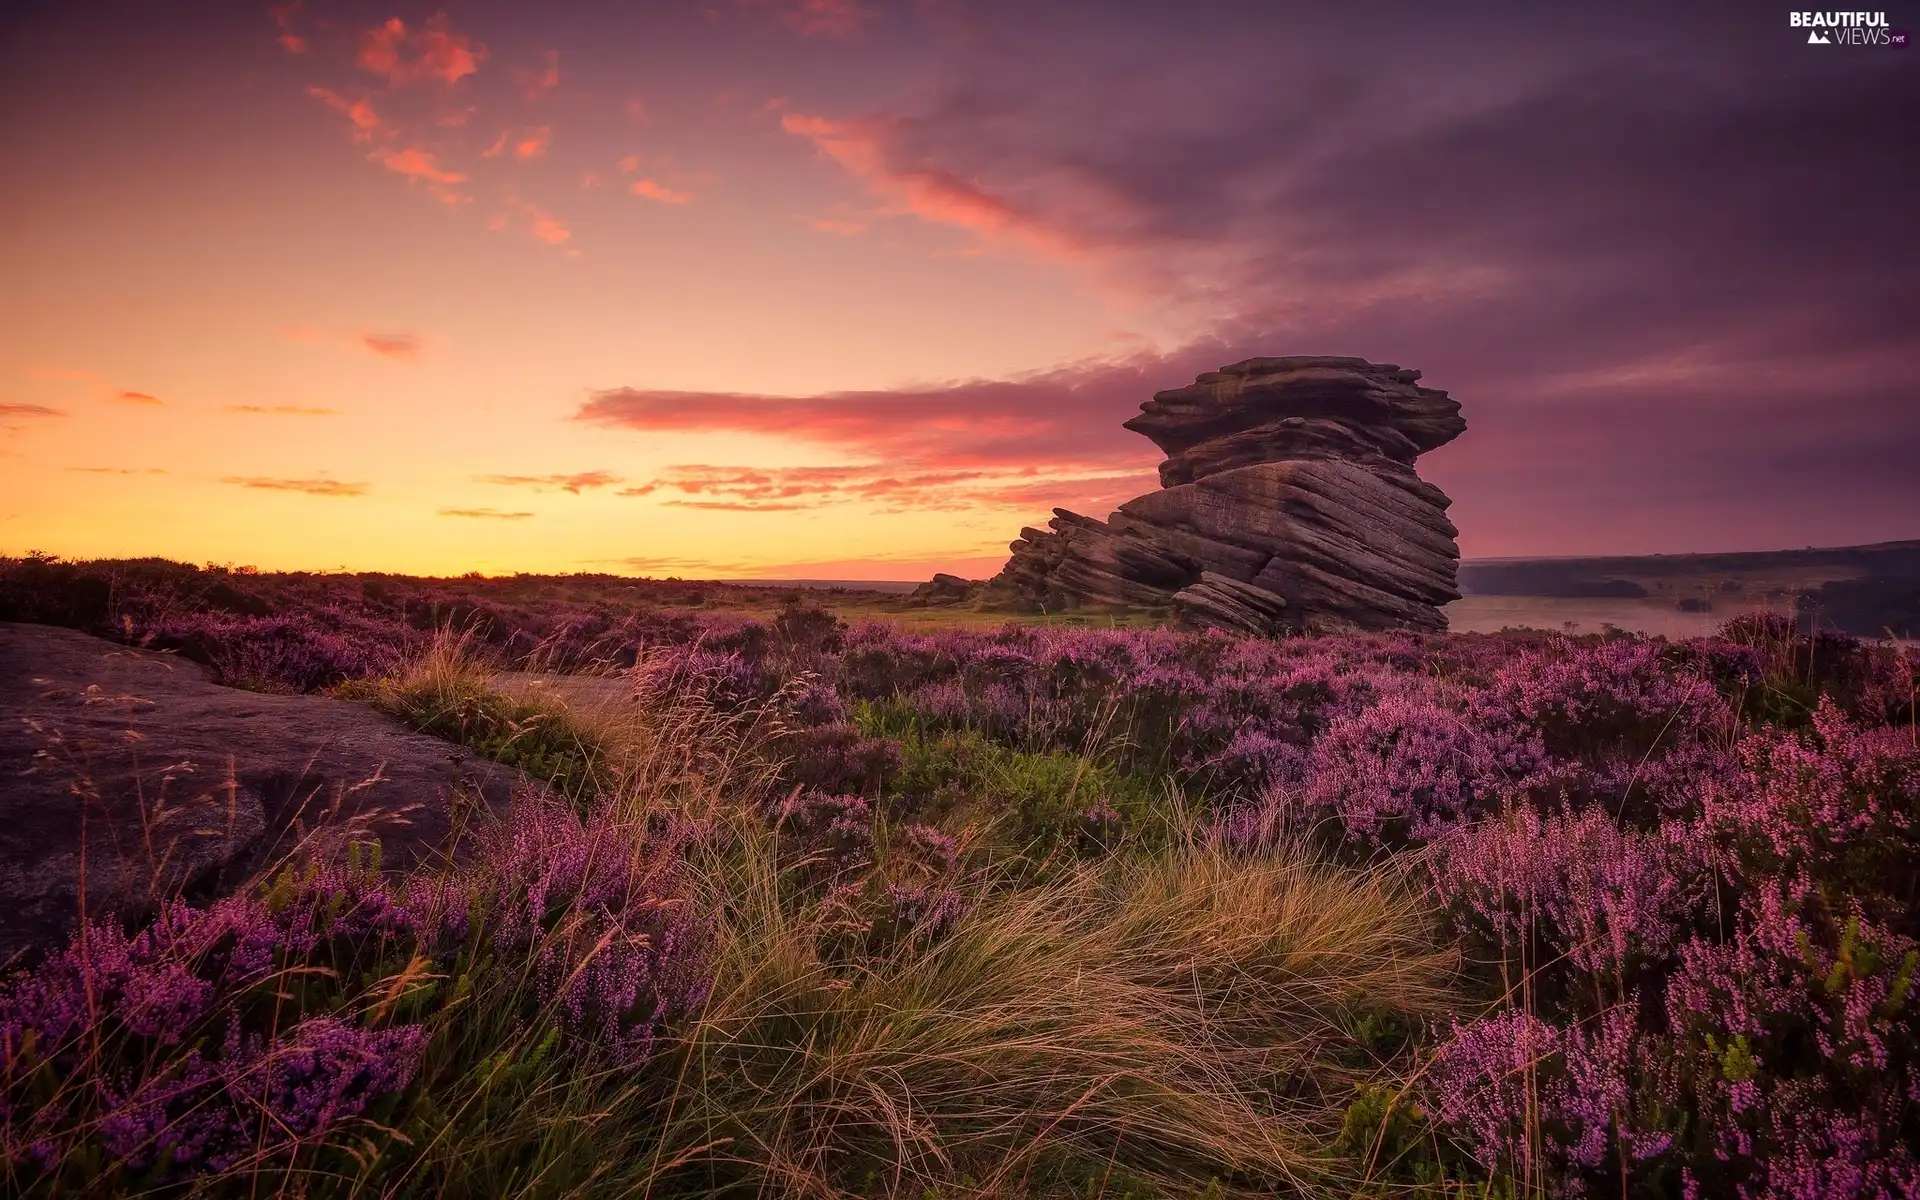 County Derbyshire, England, Peak District National Park, Salt Cellar Rock Formation, rocks, Great Sunsets, Stones, heath, The Hills